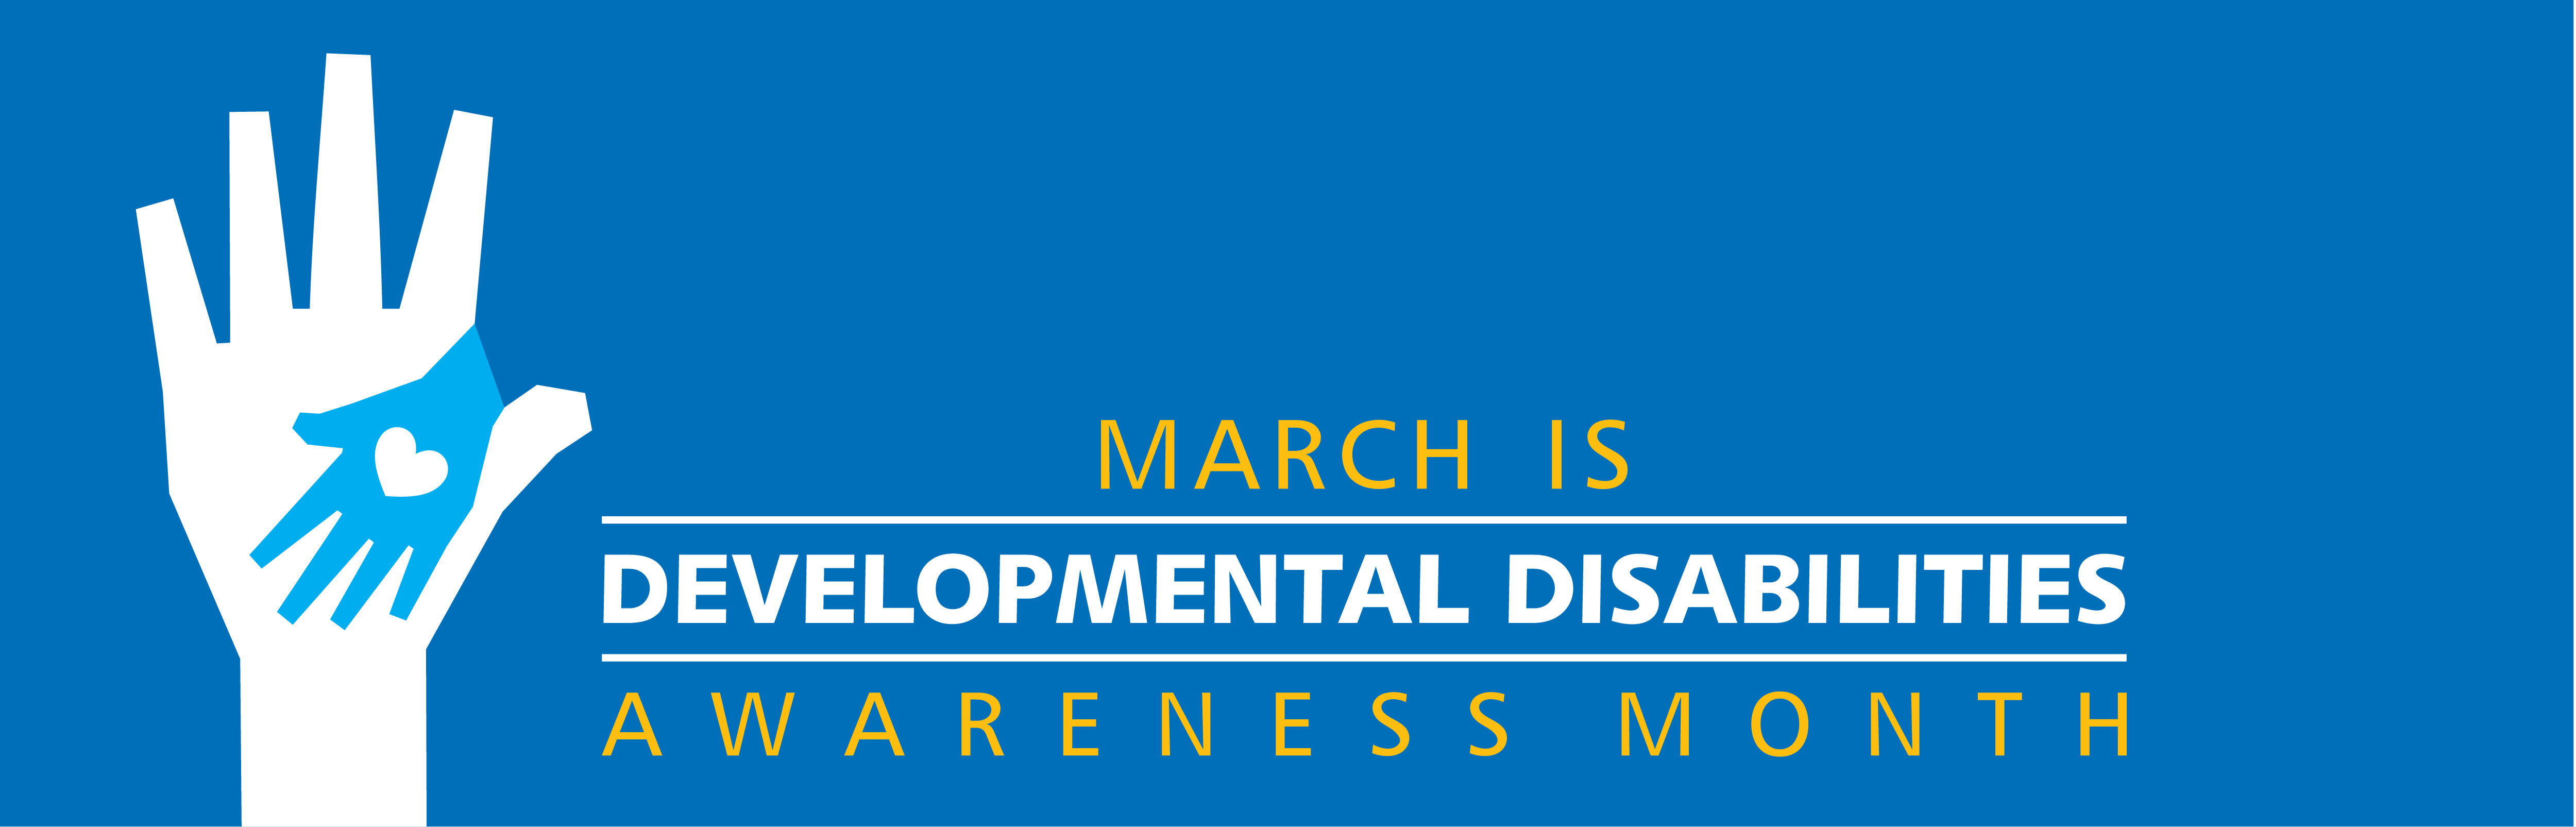 March is Developmental Disabilities Awareness Month